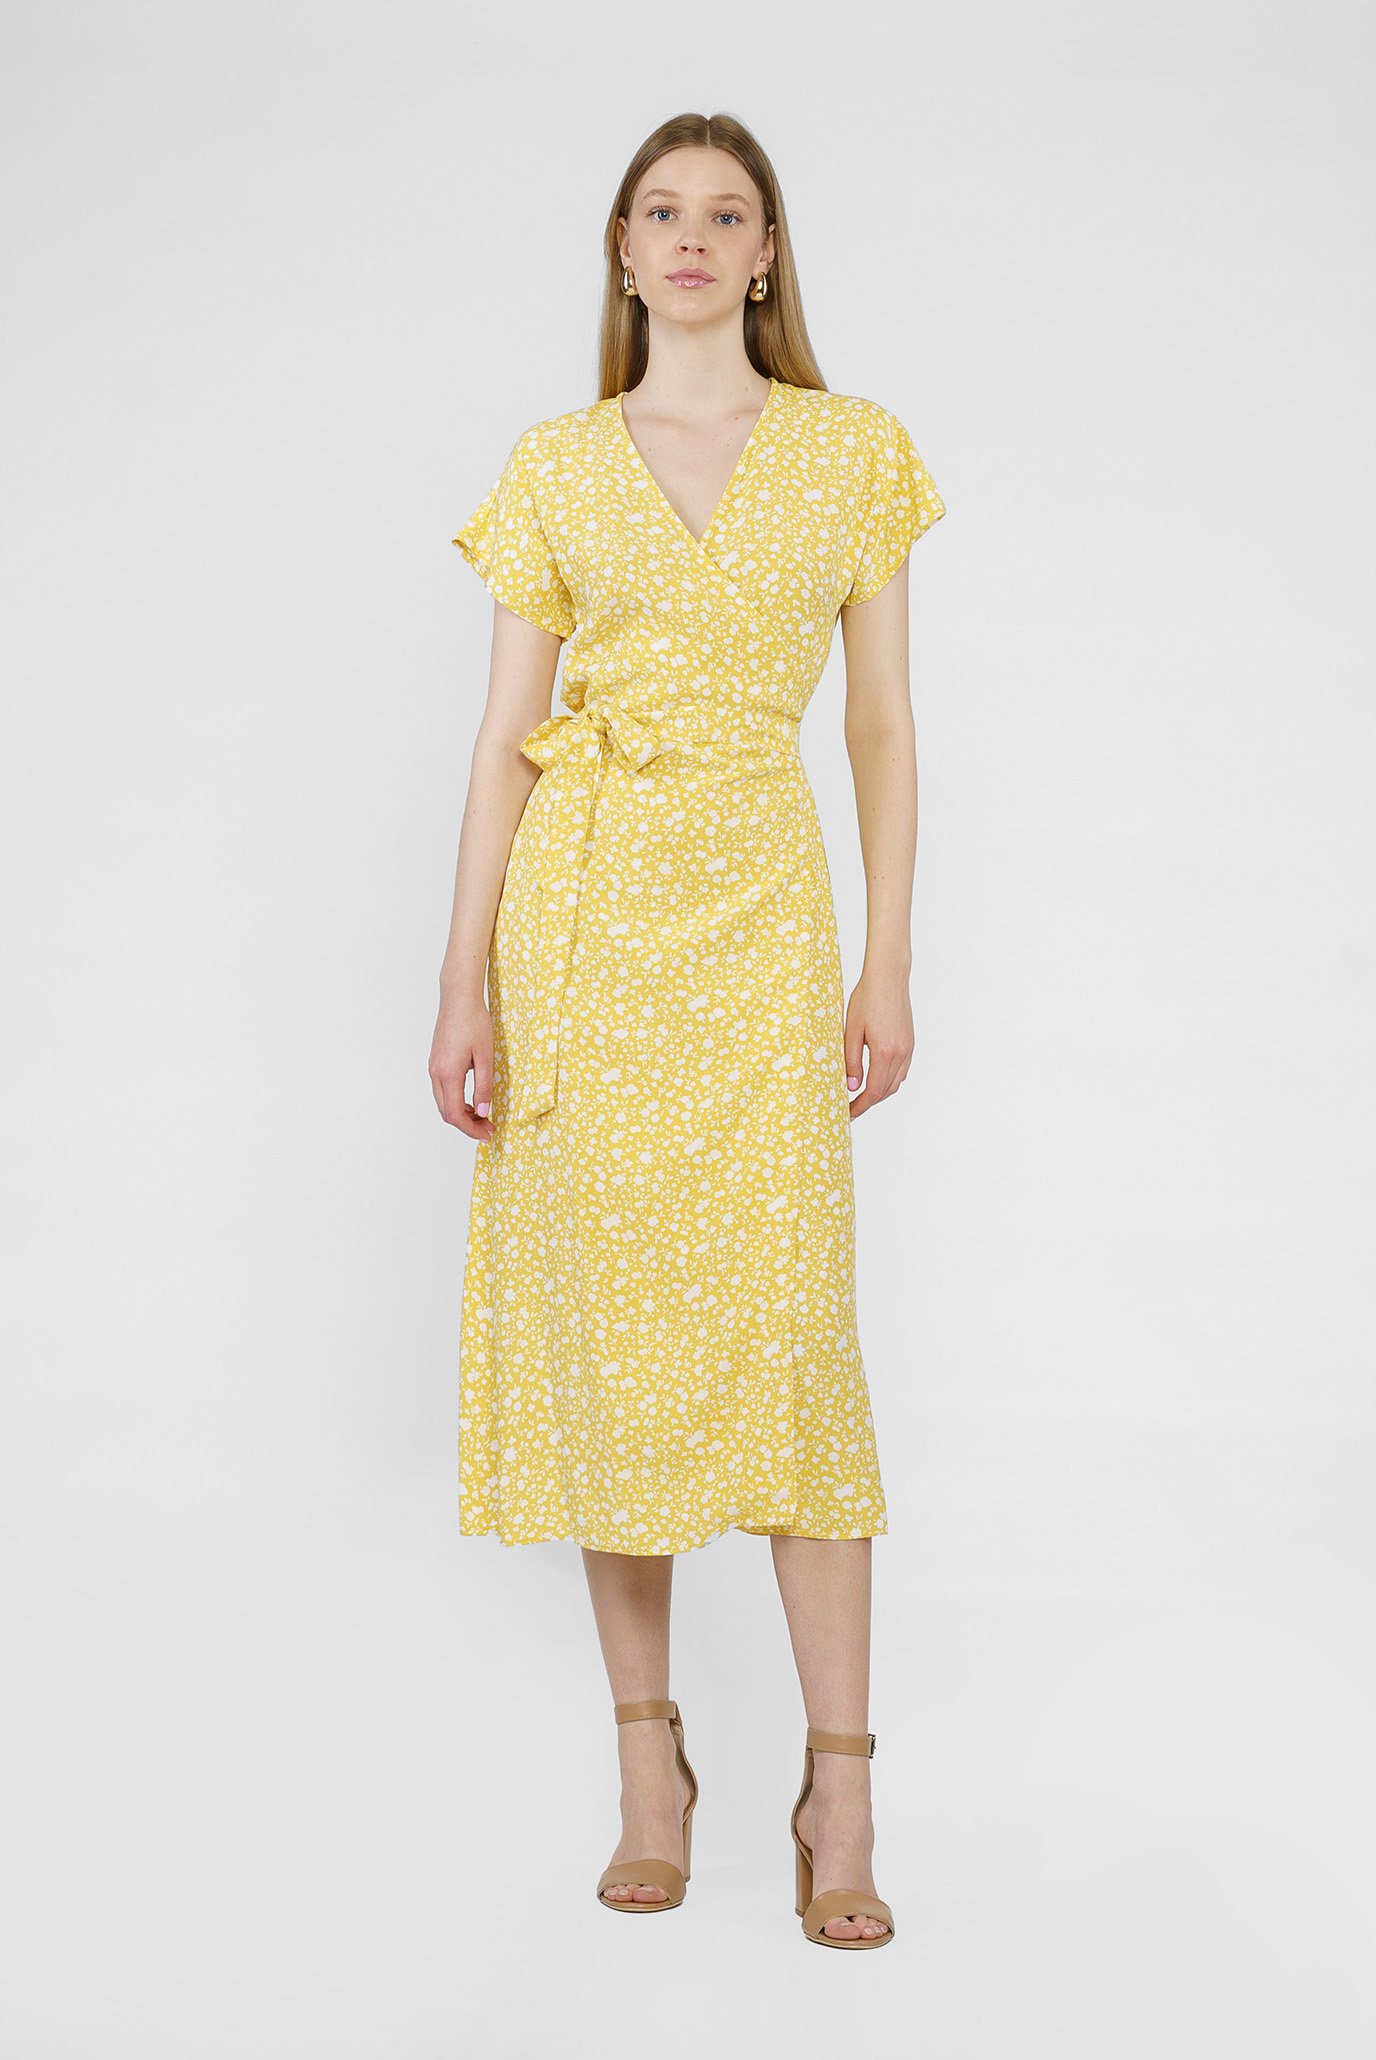 Женское желтое платье с узором 1